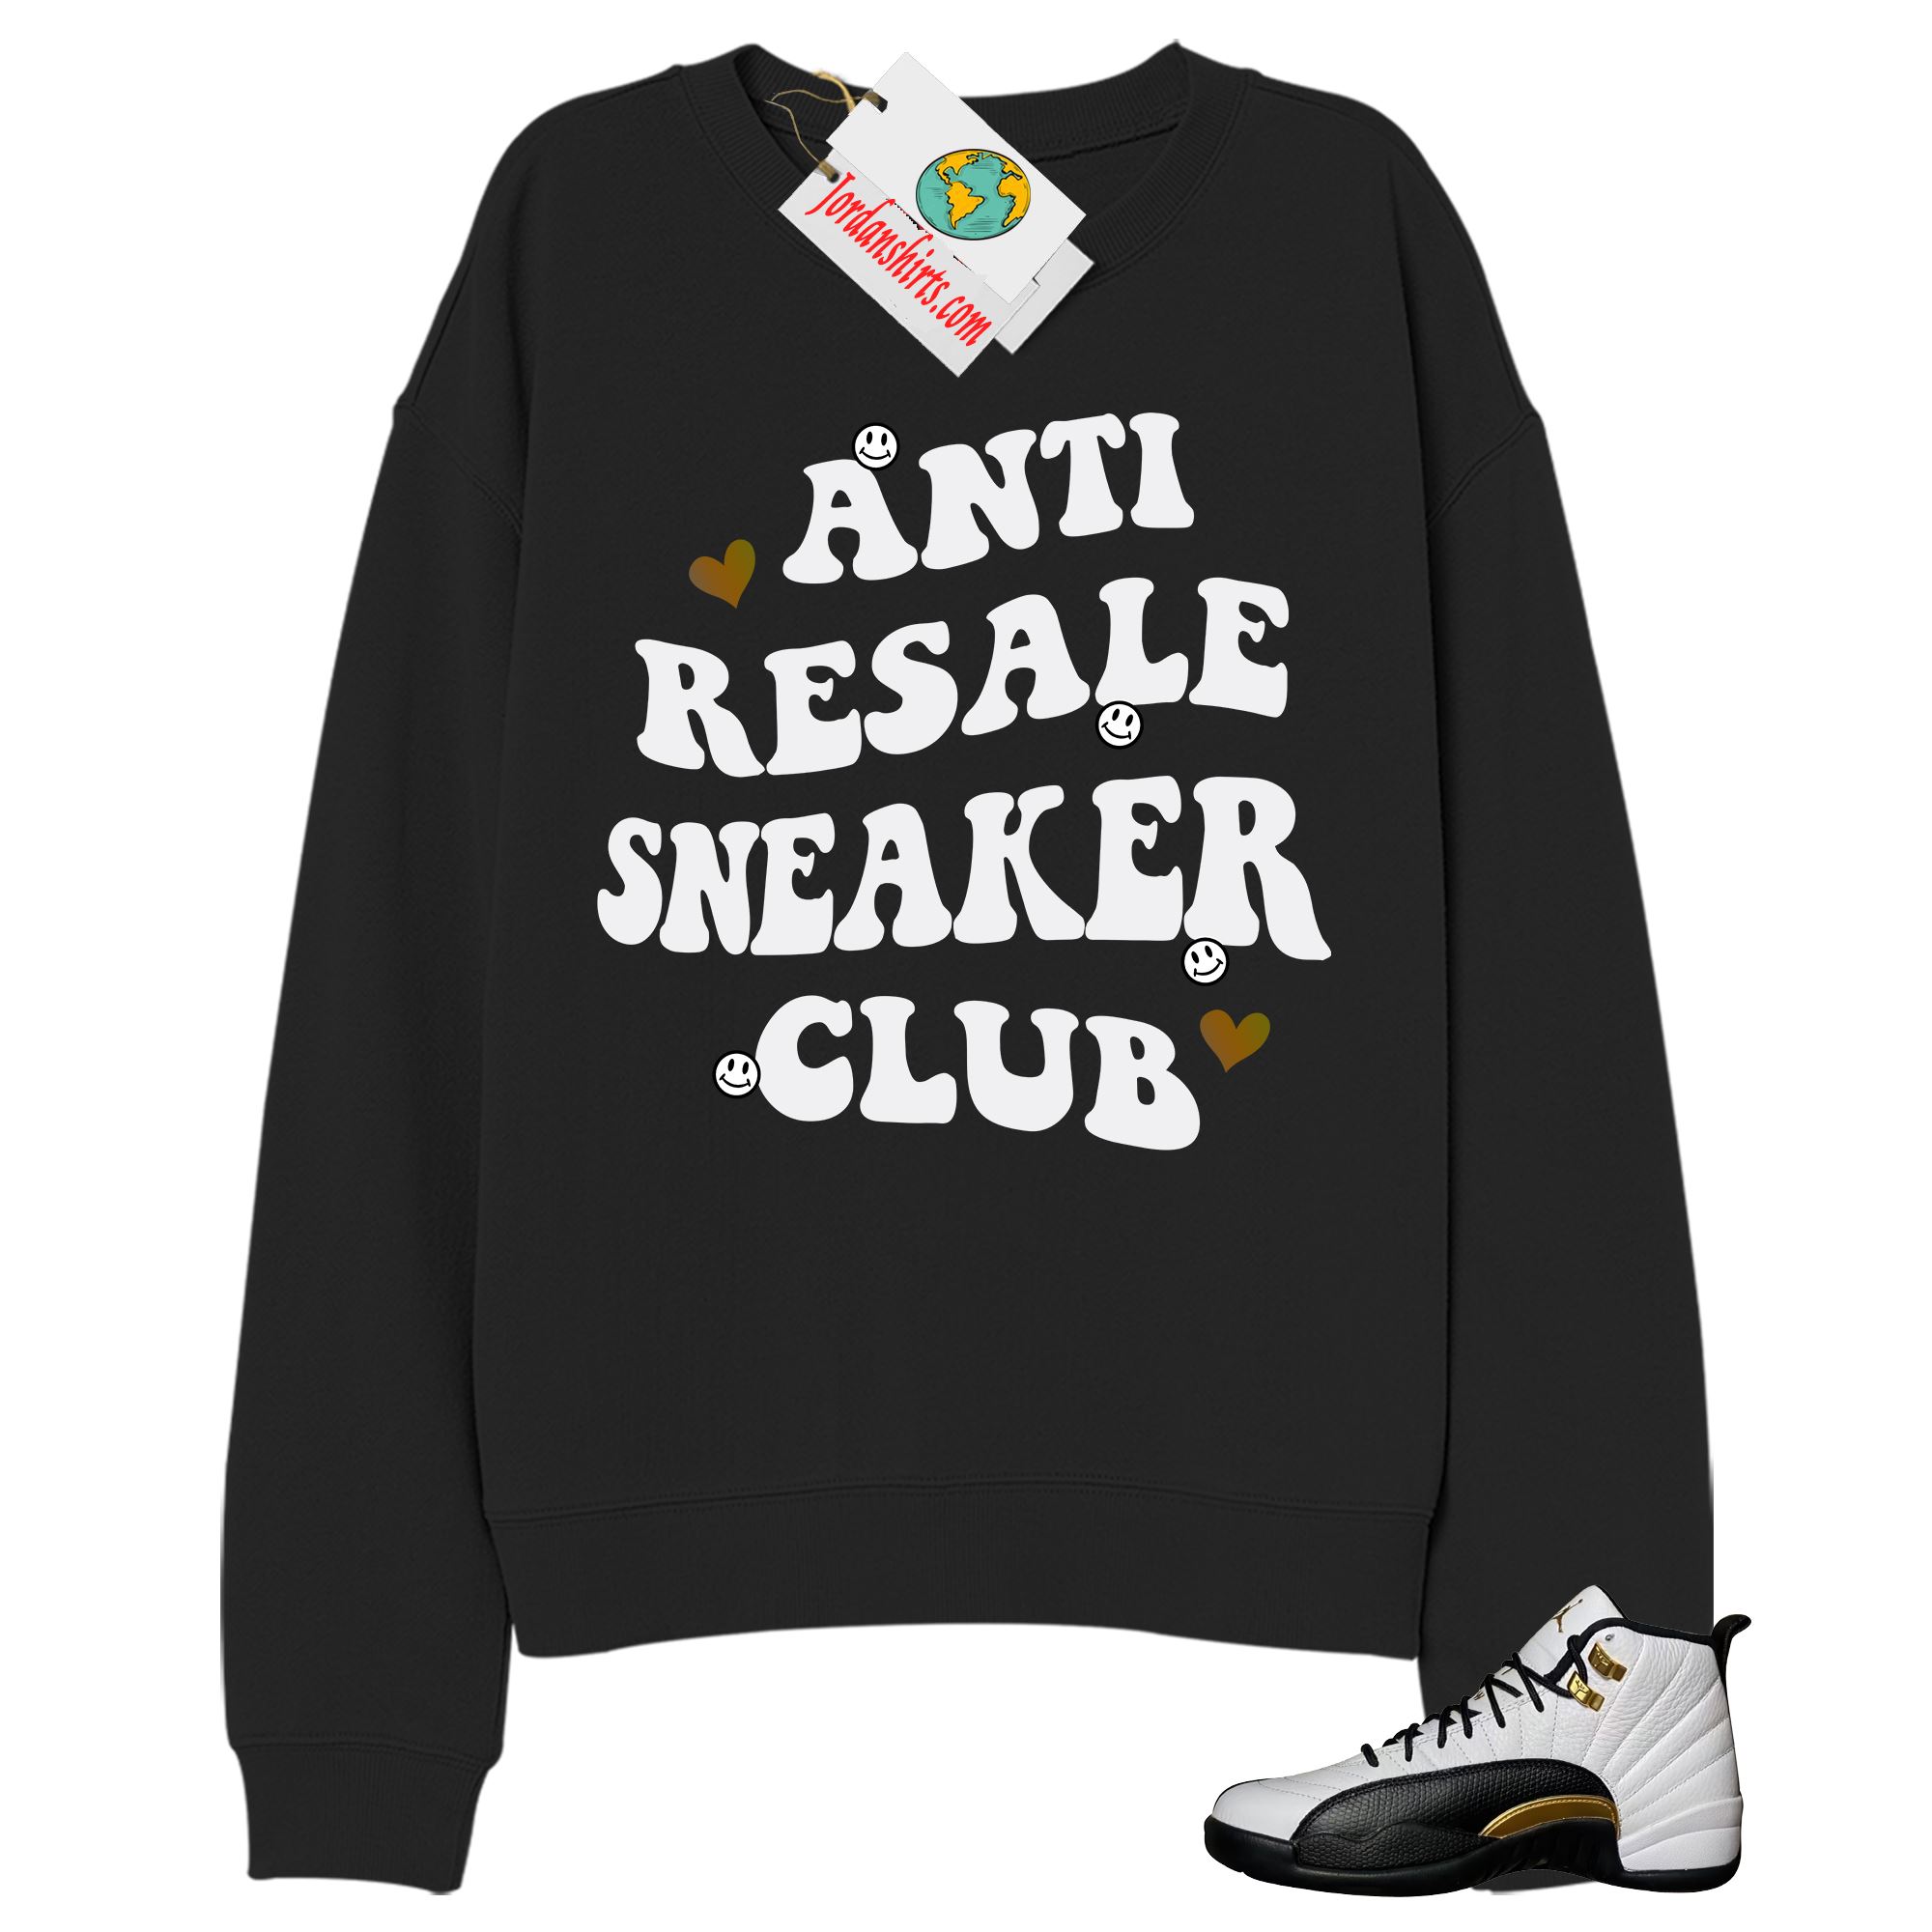 Jordan 12 Sweatshirt, Anti Resale Sneaker Club Black Sweatshirt Air Jordan 12 Royalty 12s Plus Size Up To 5xl